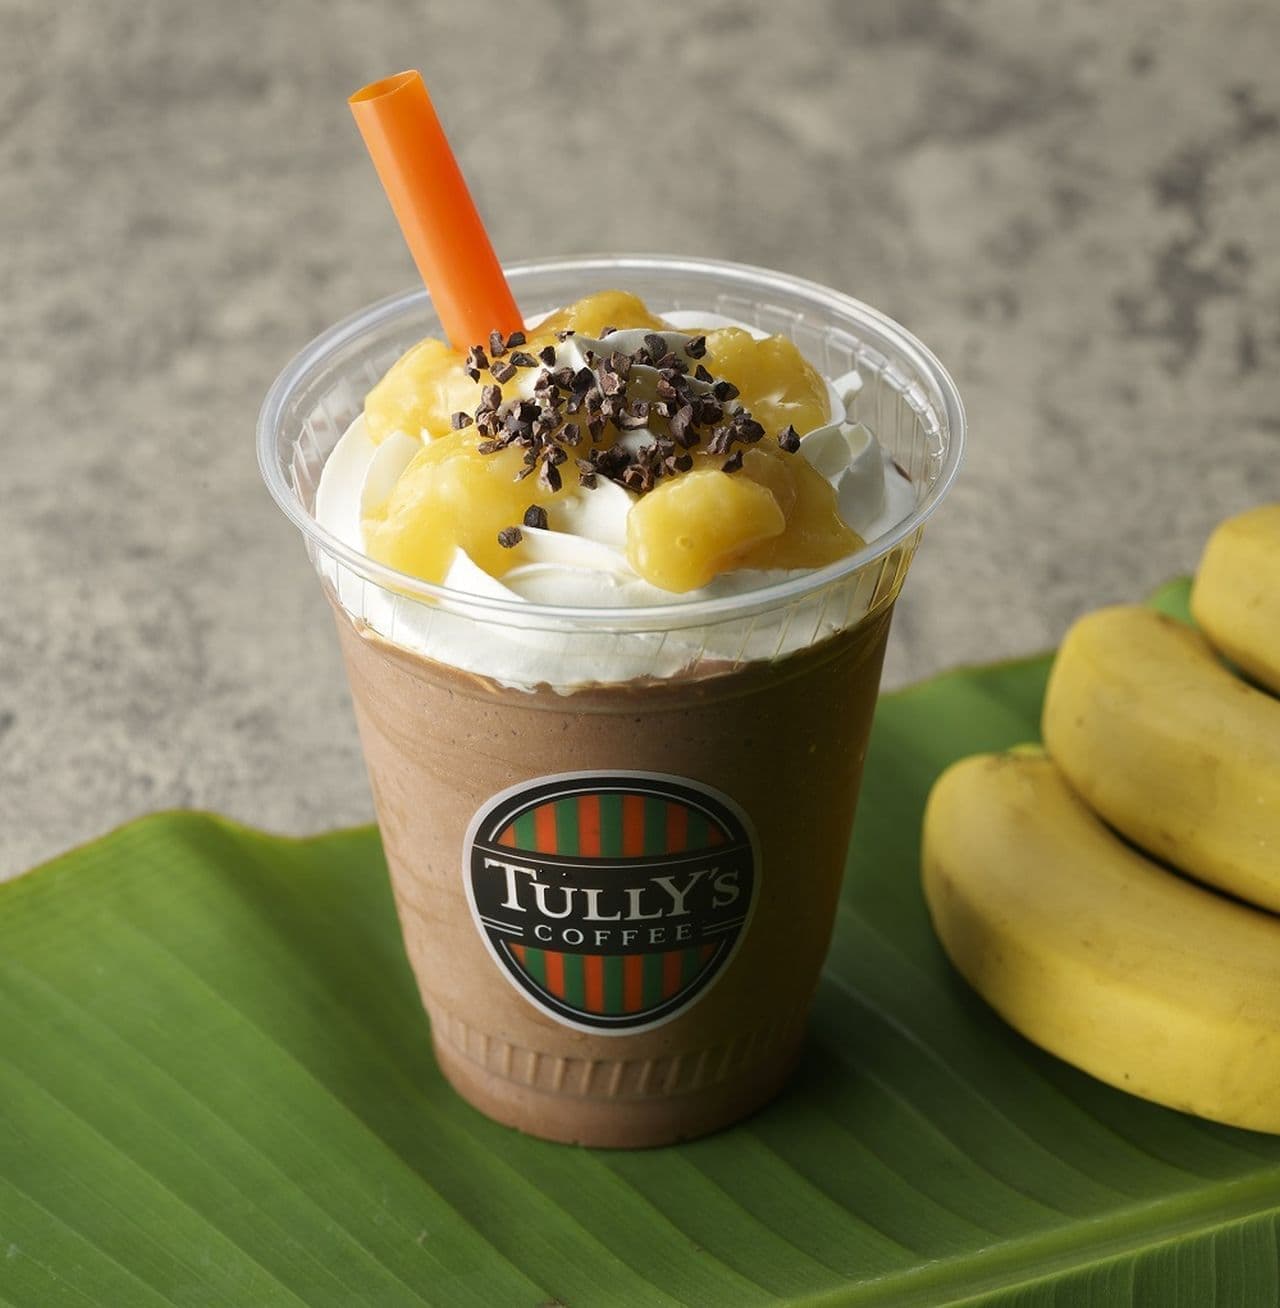 Tully's Coffee "Banana Chocolate Lista